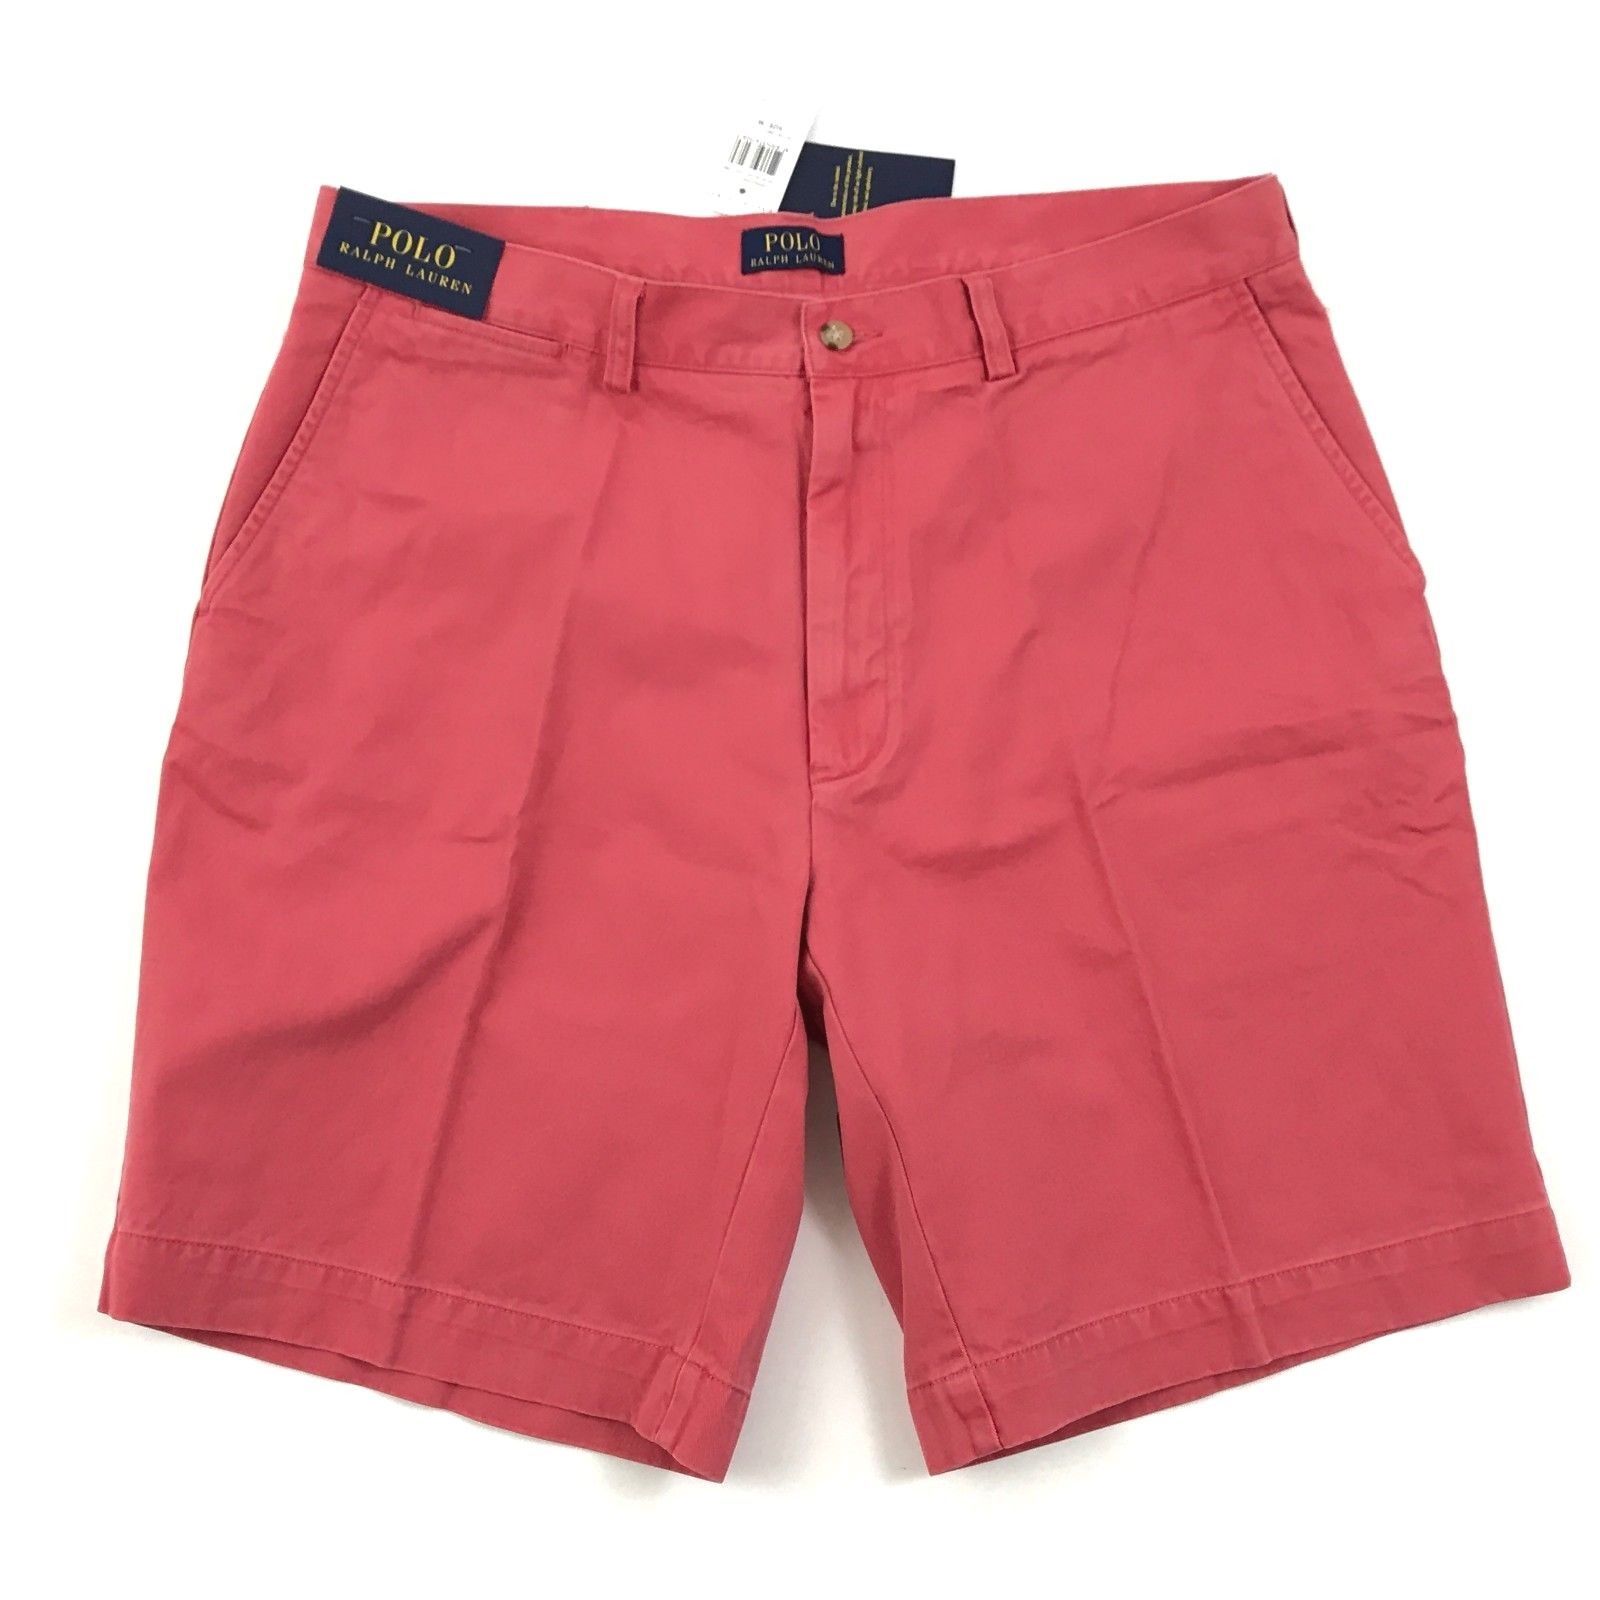 Neu Polo Ralph Lauren Korallenrot Shorts Größe 36 Khaki Chino Glatt Vorne - $44.88